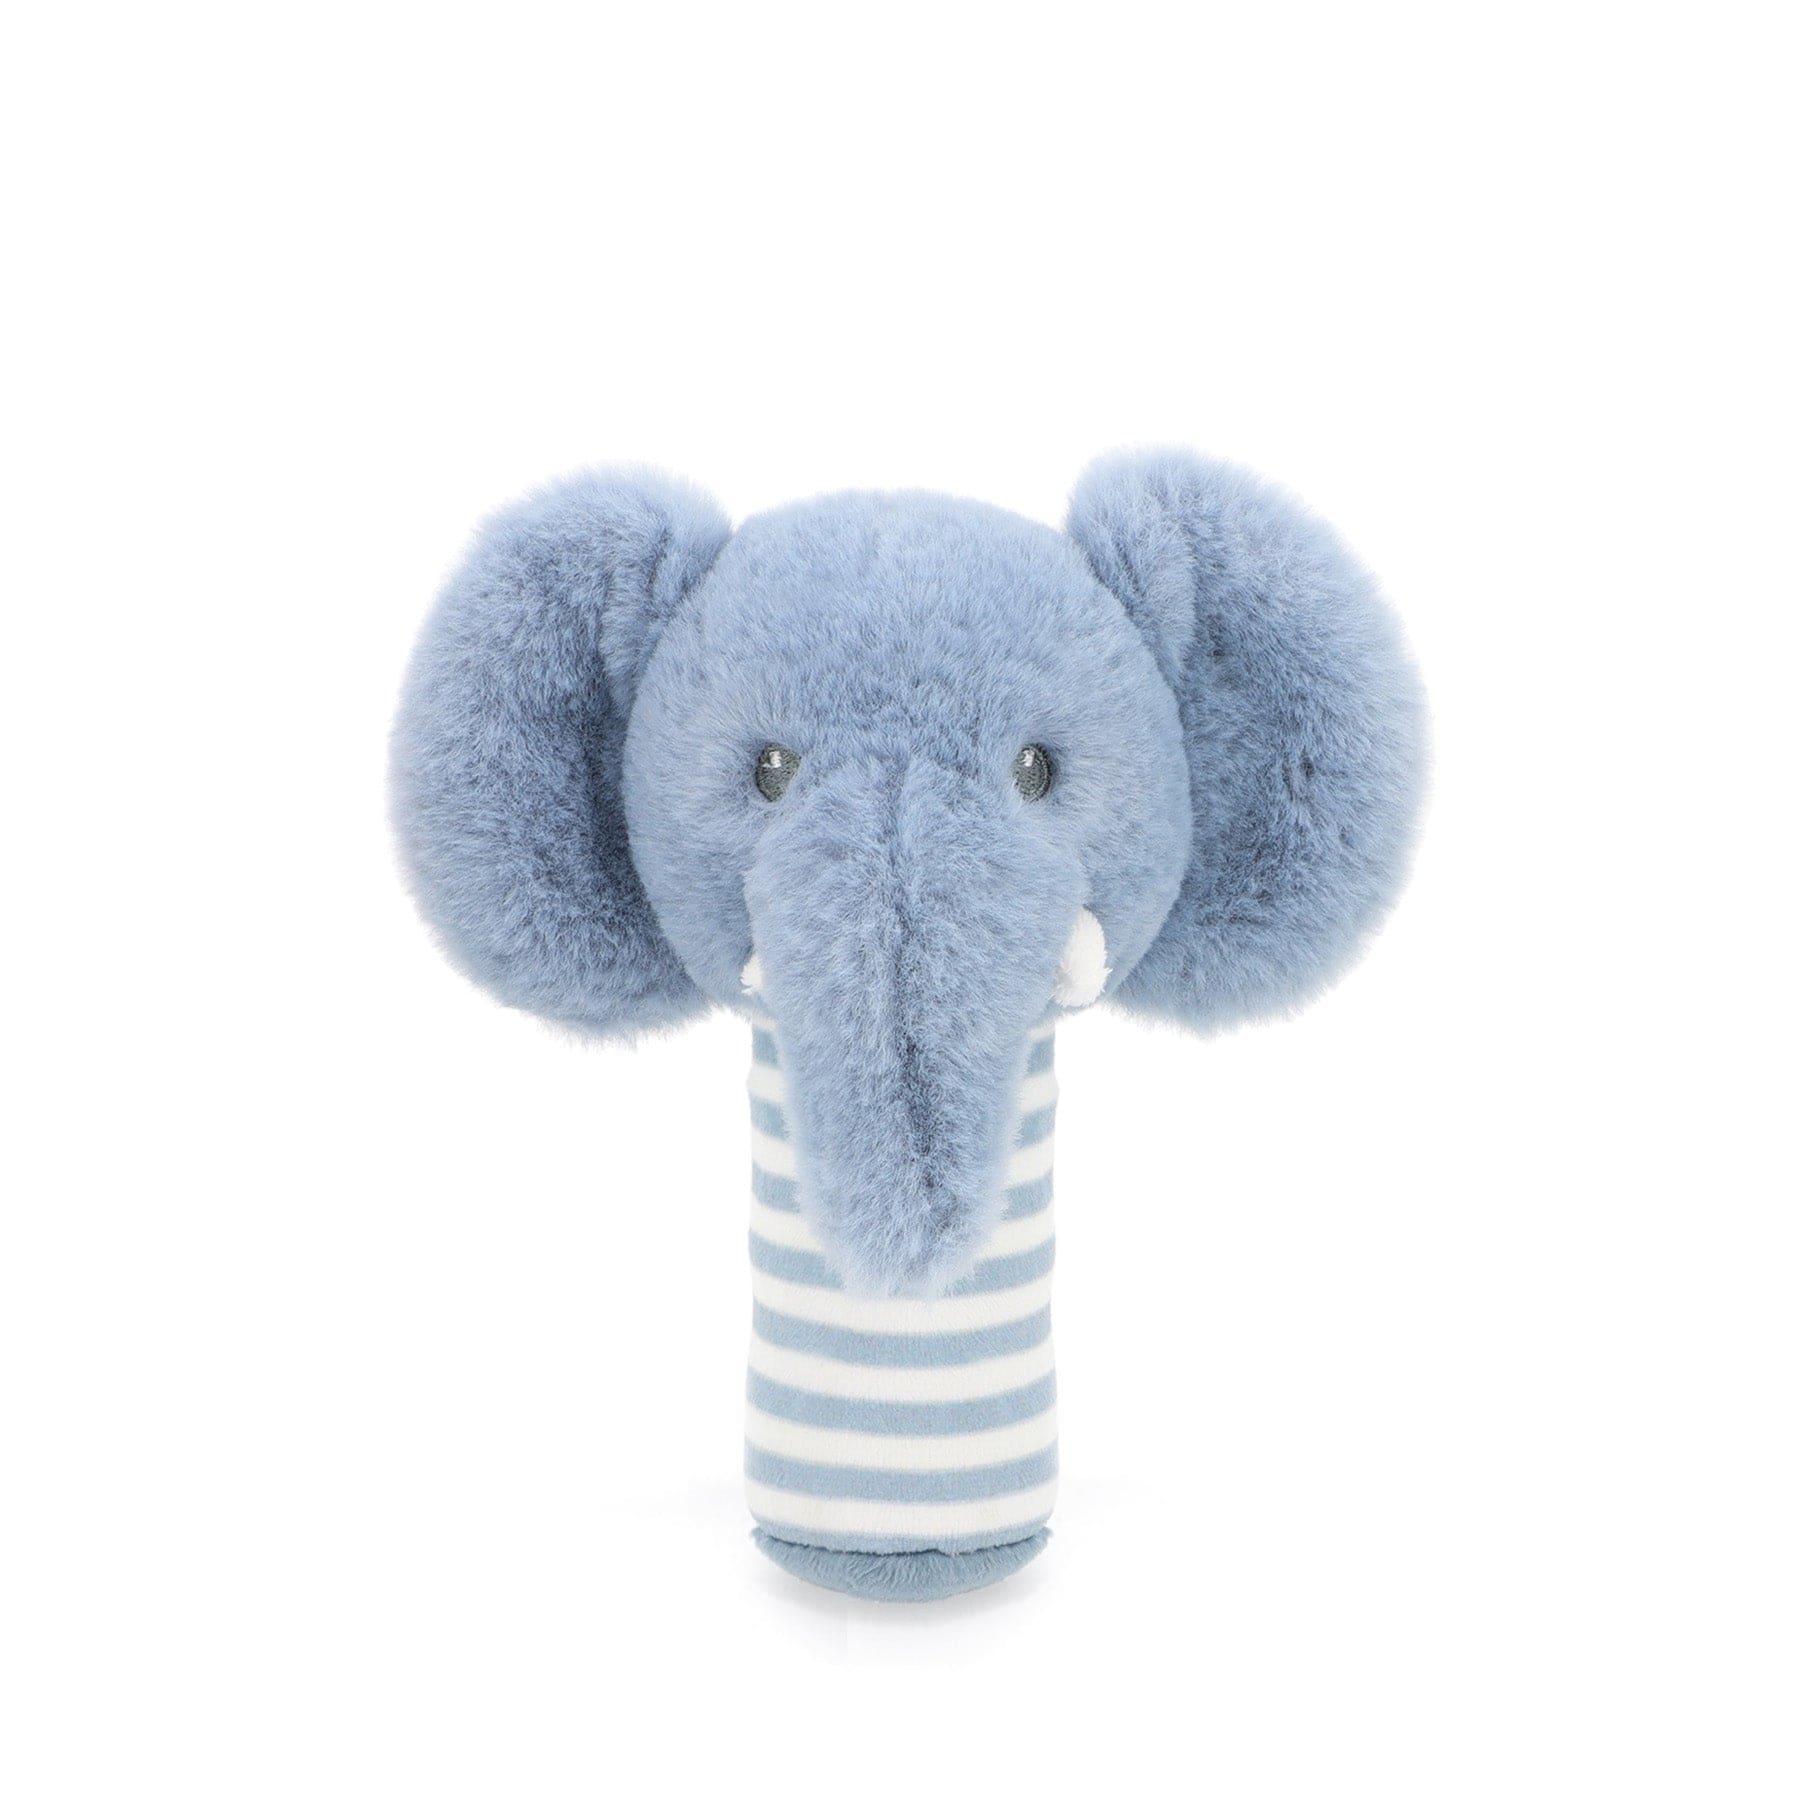 Blue plush elephant puppet with striped bottom on white background